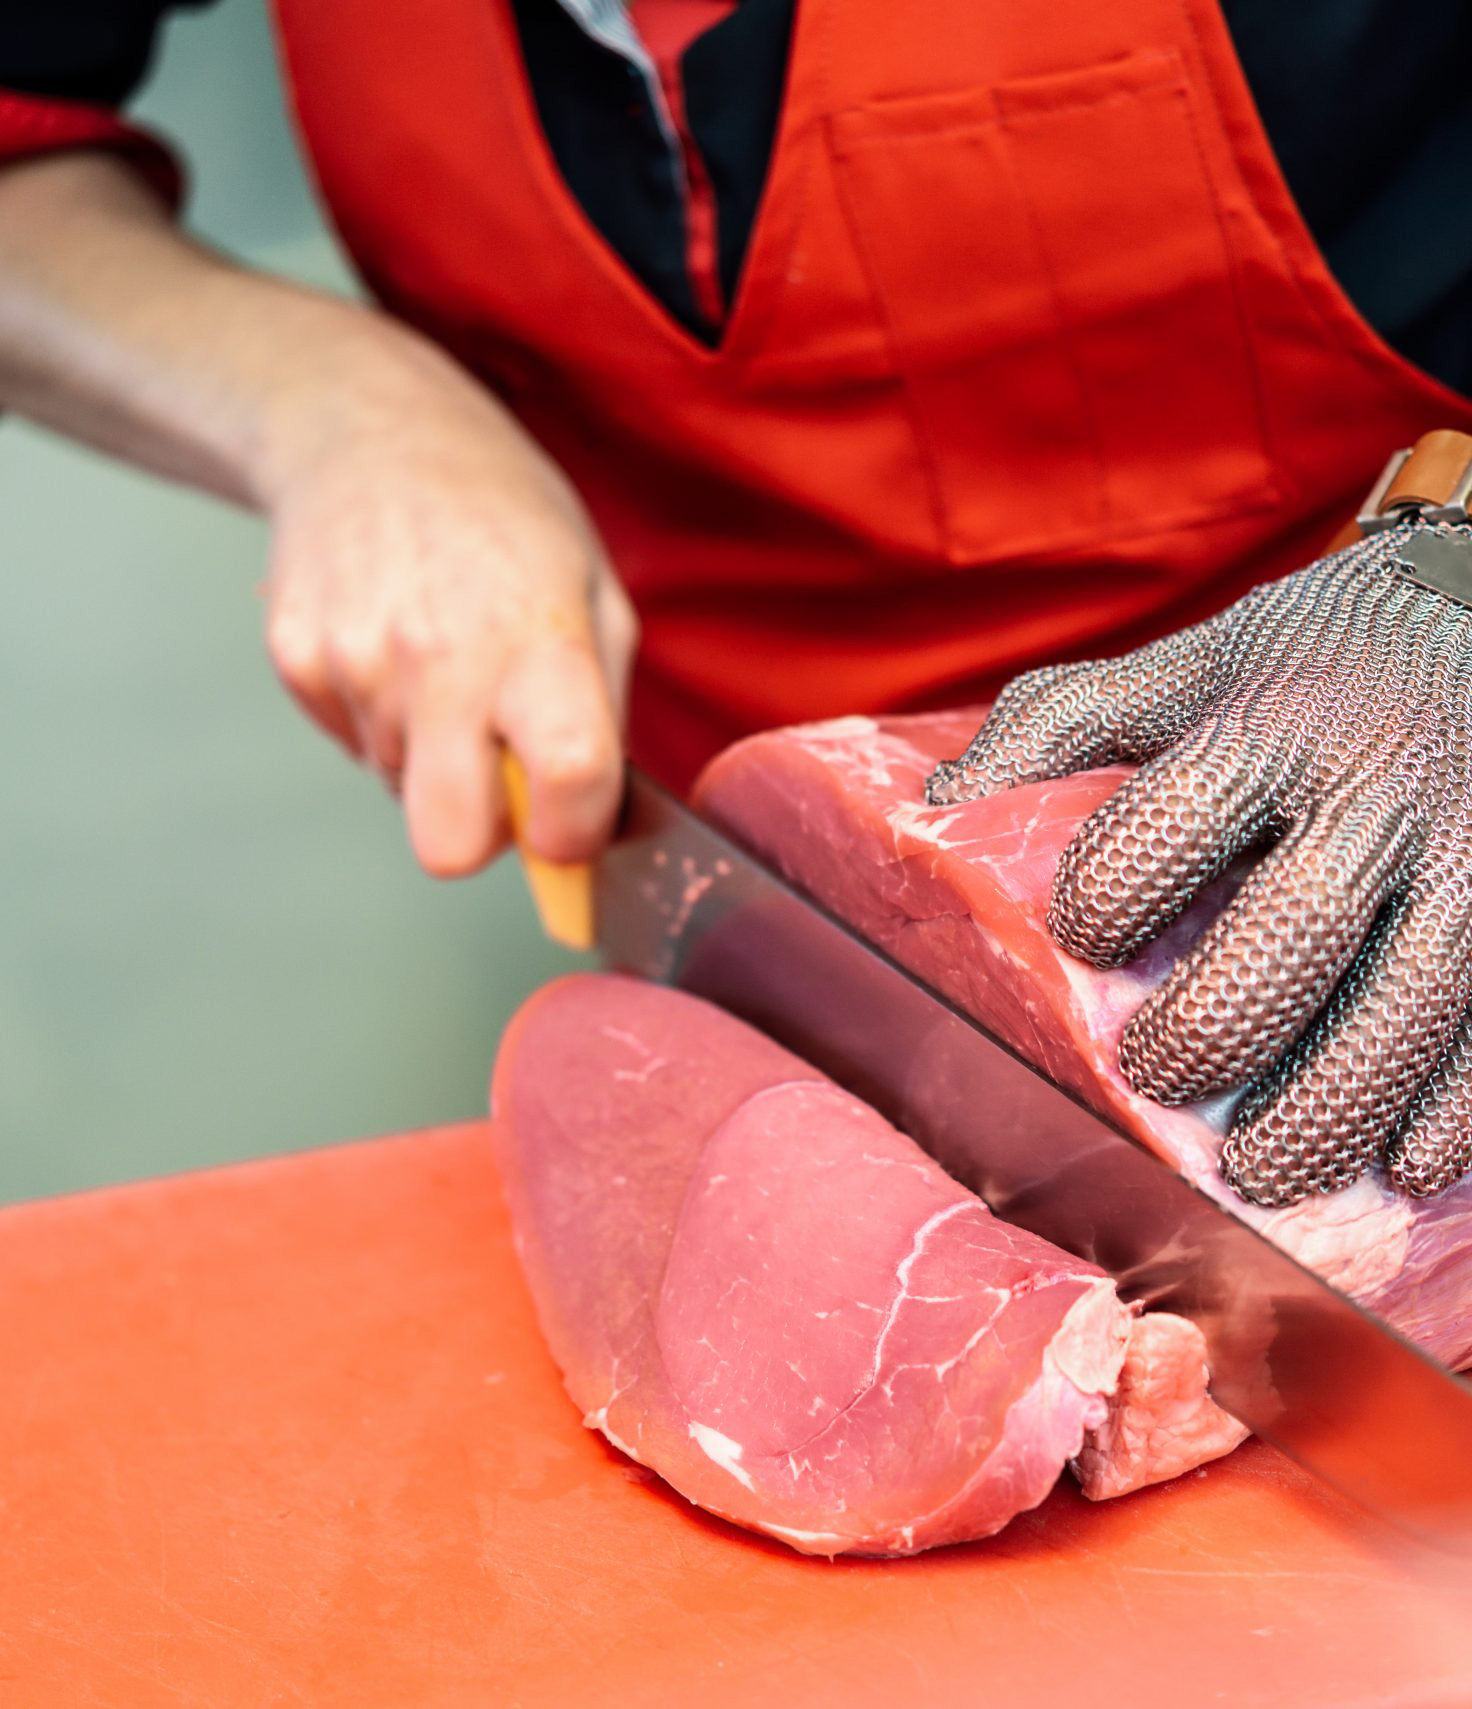 butcher delicatessen offer